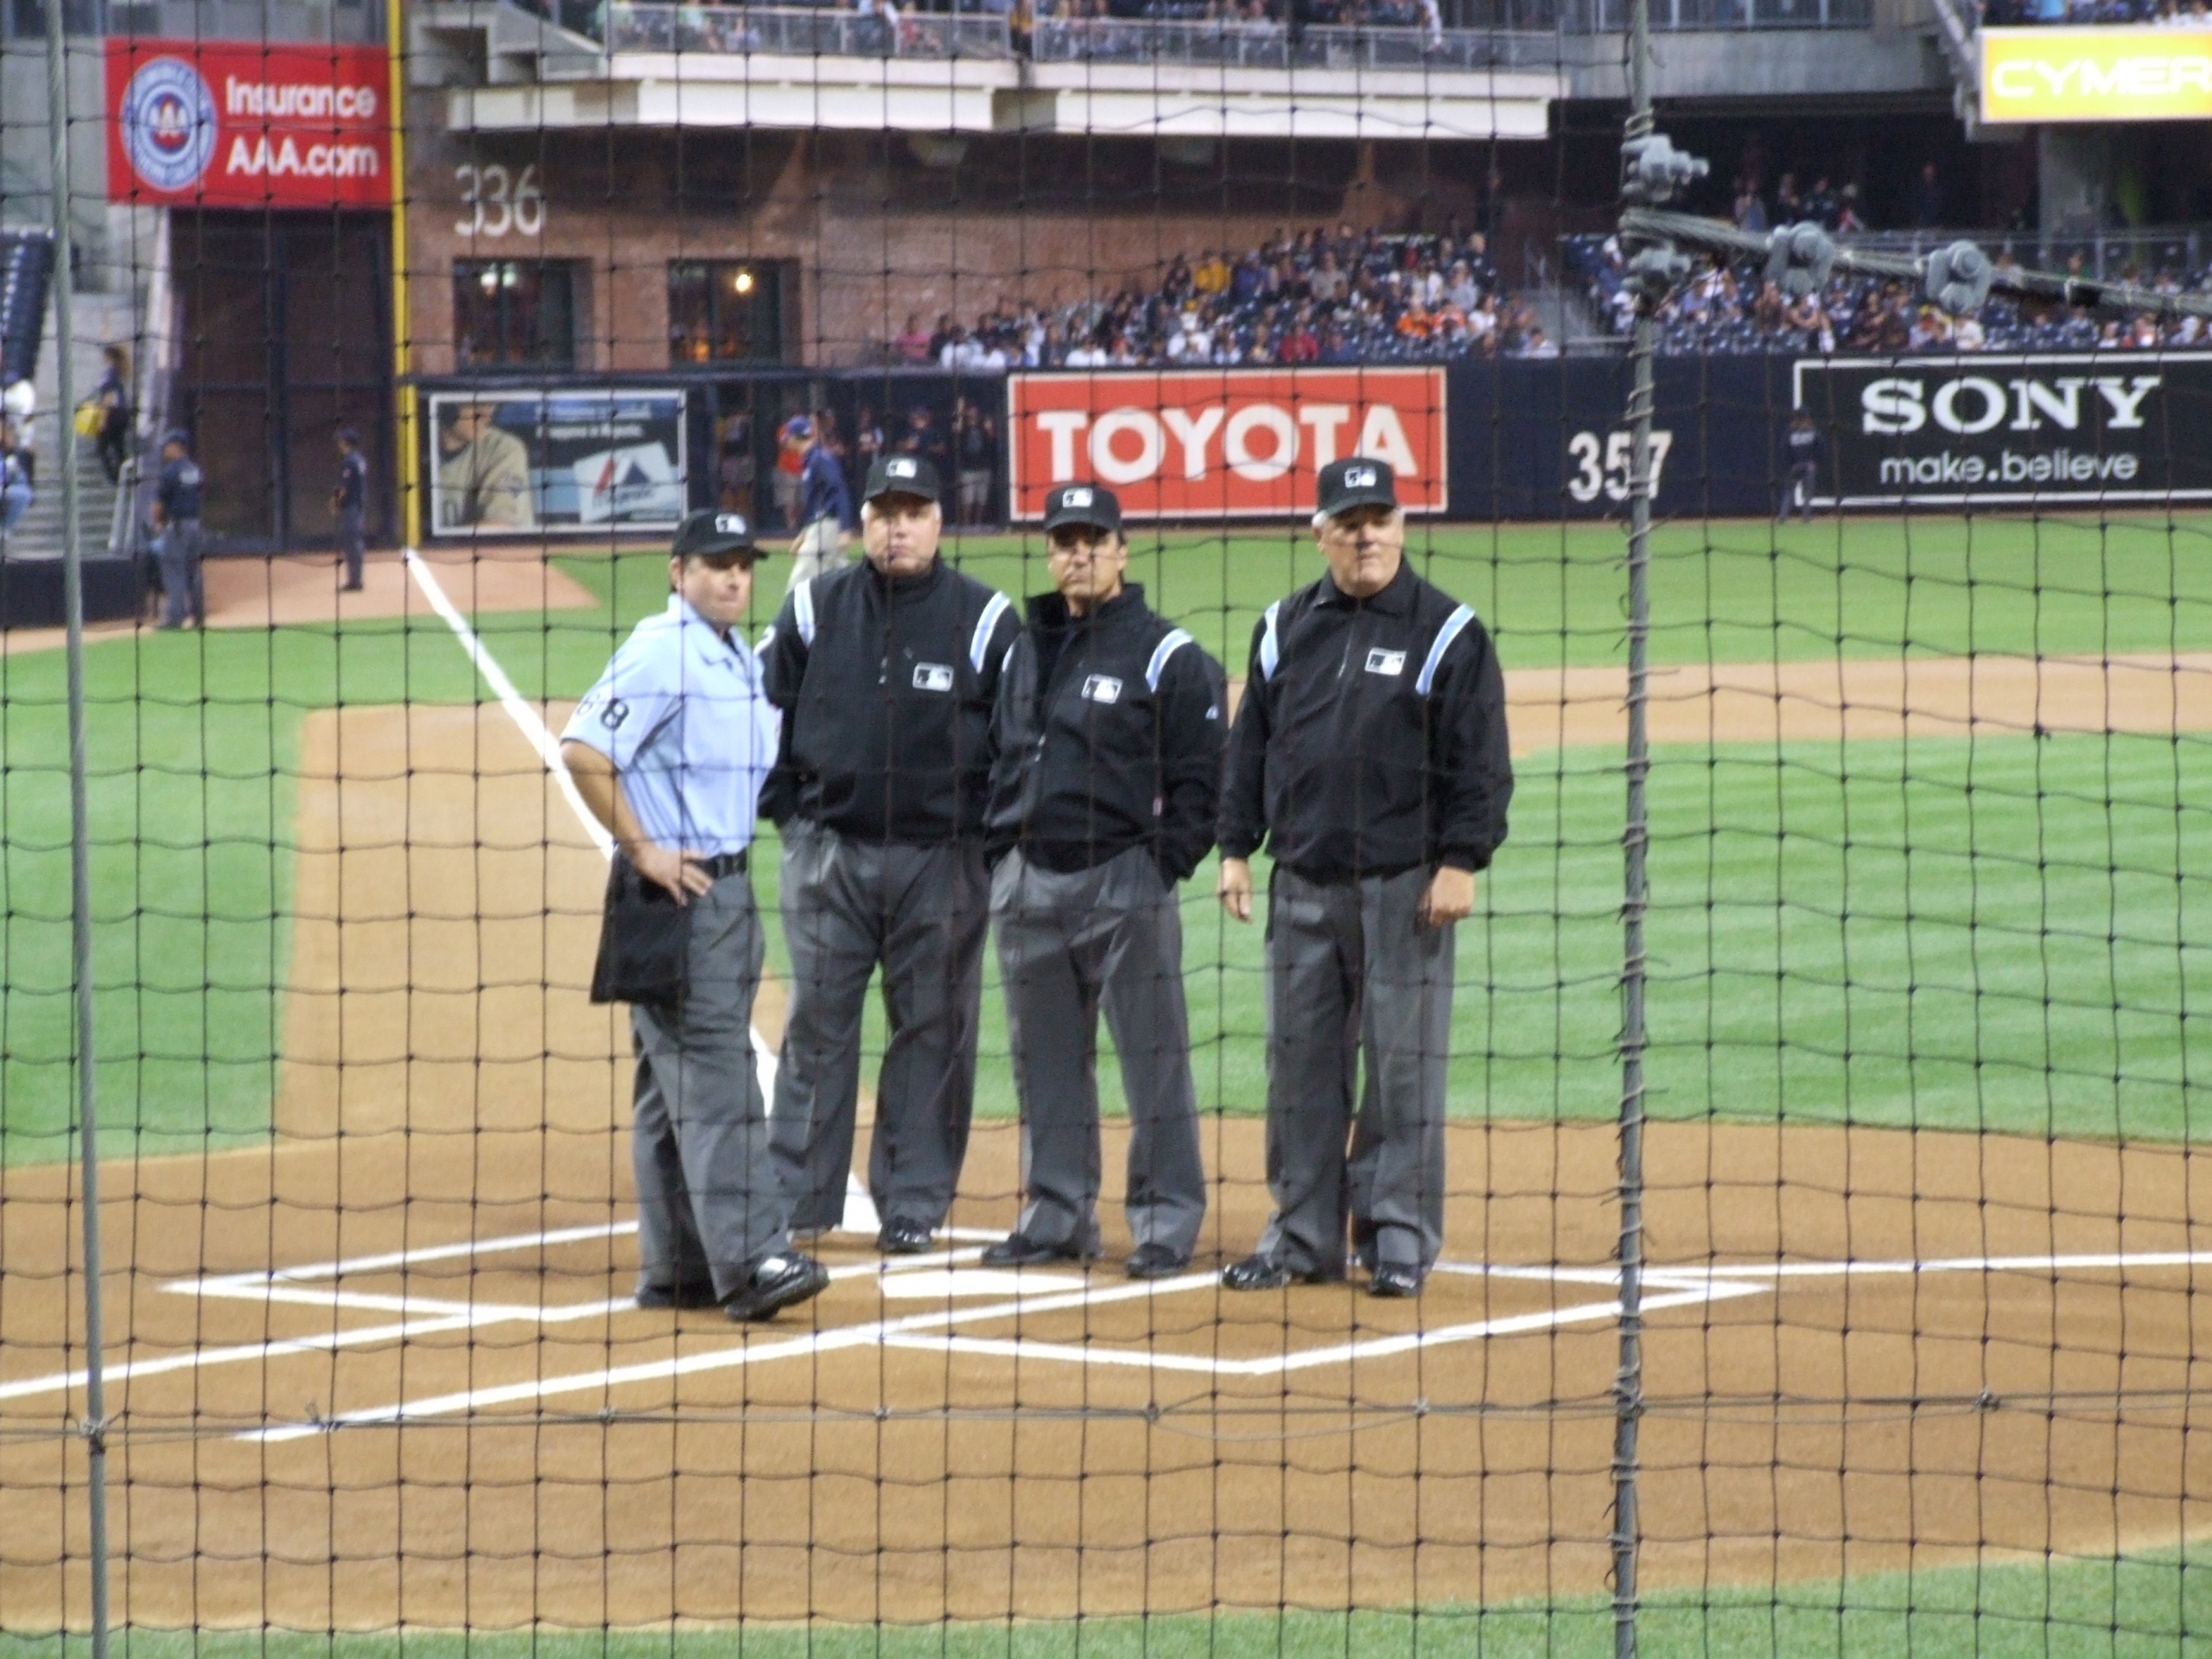 Major League Baseball umpires: Danger zone ahead?